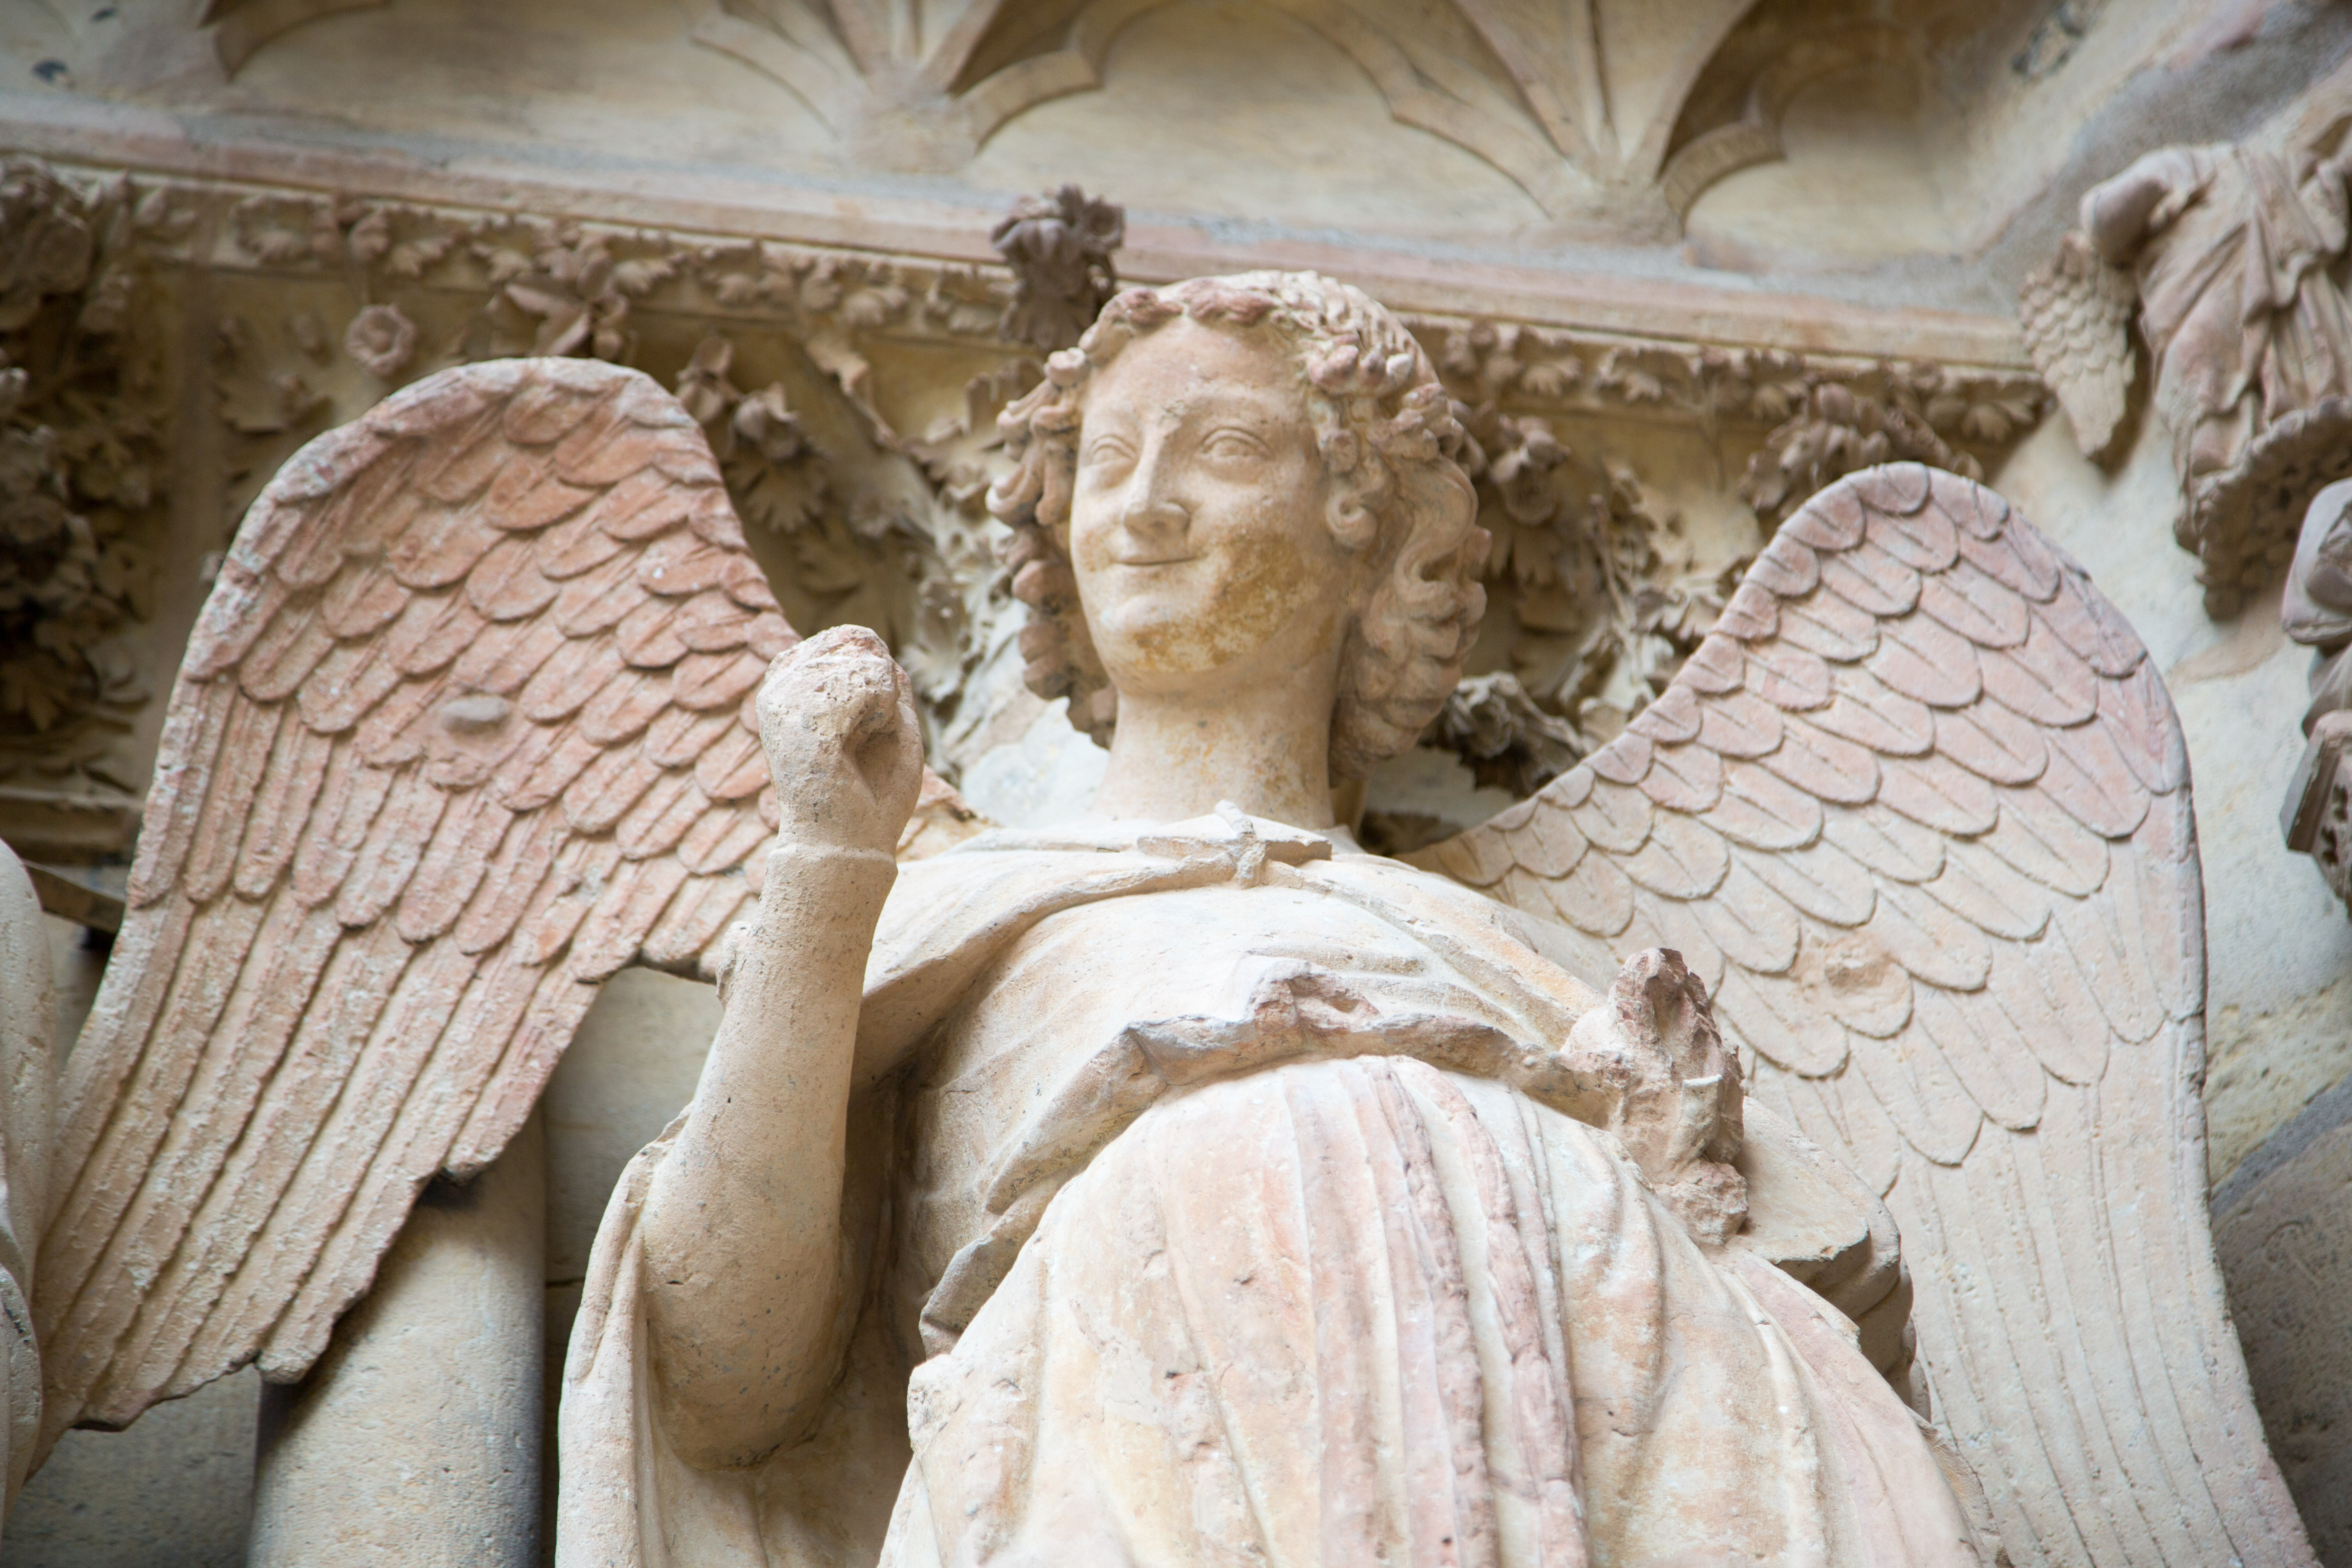 happy angel statue